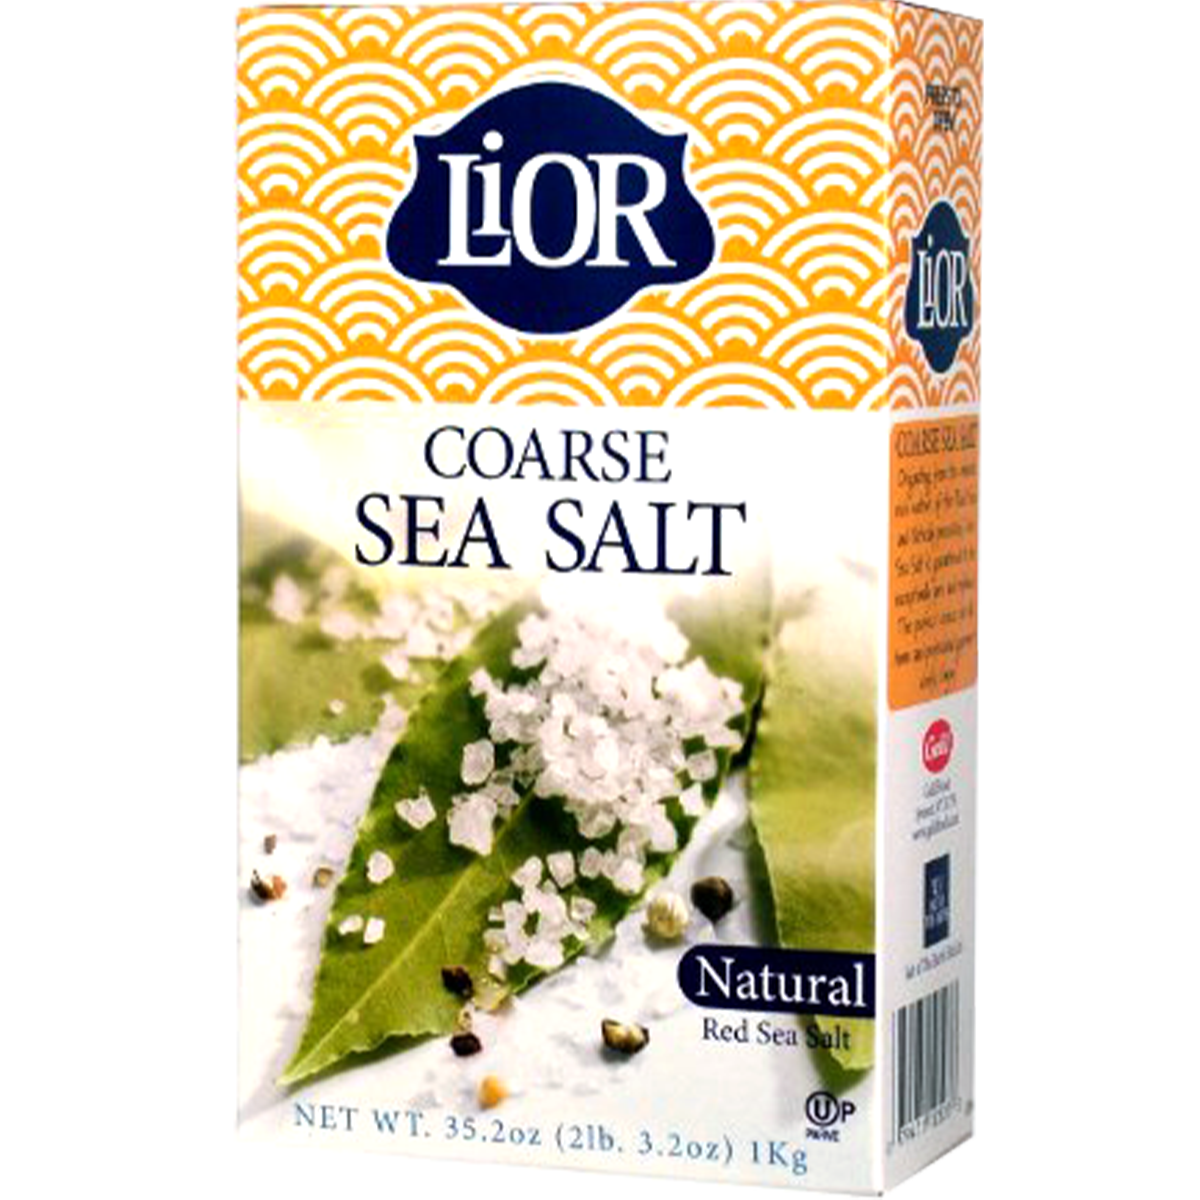 Coarse Sea Salt | Chefs Box | 35.2 oz (2.2 lbs) | LiOR